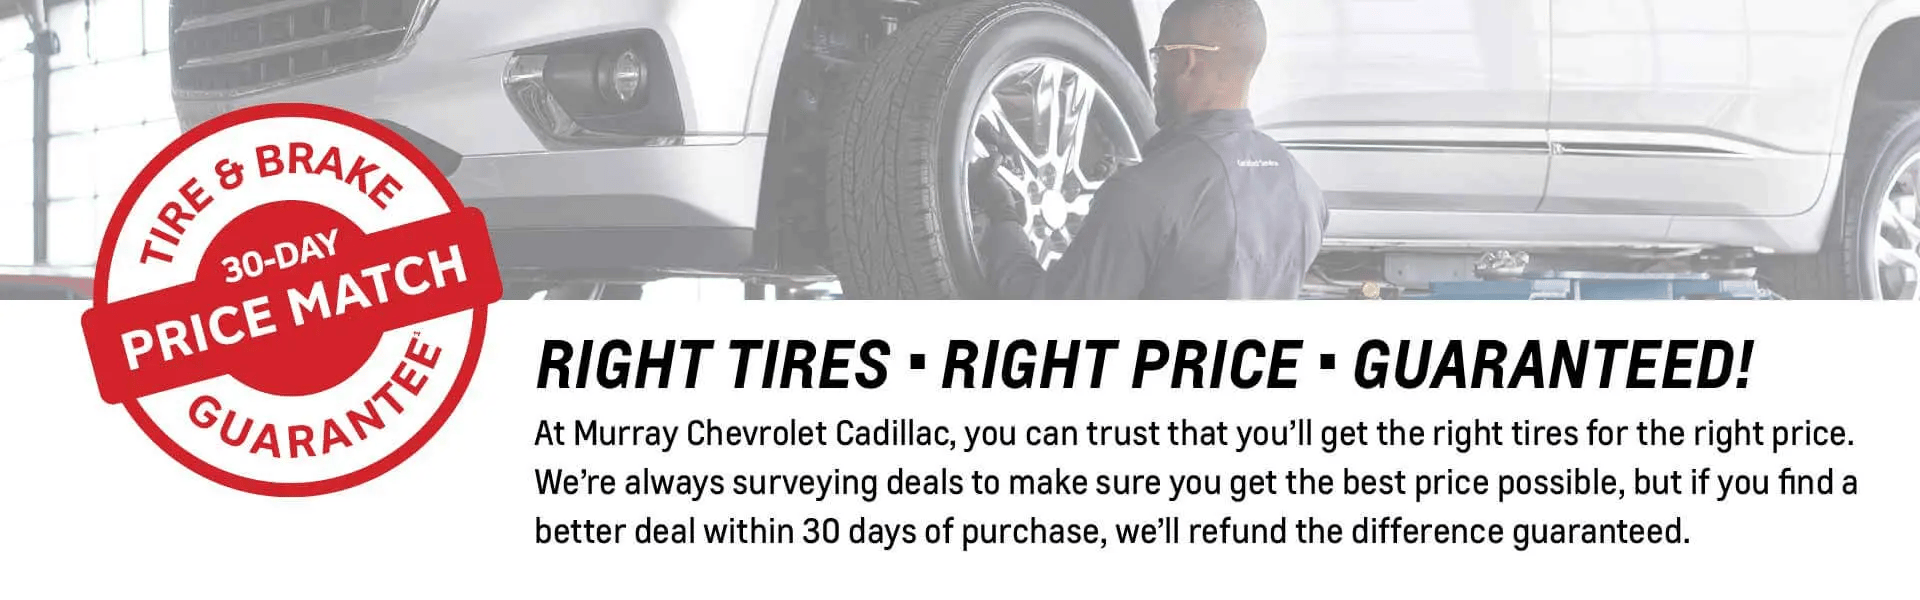 Tires Price Match